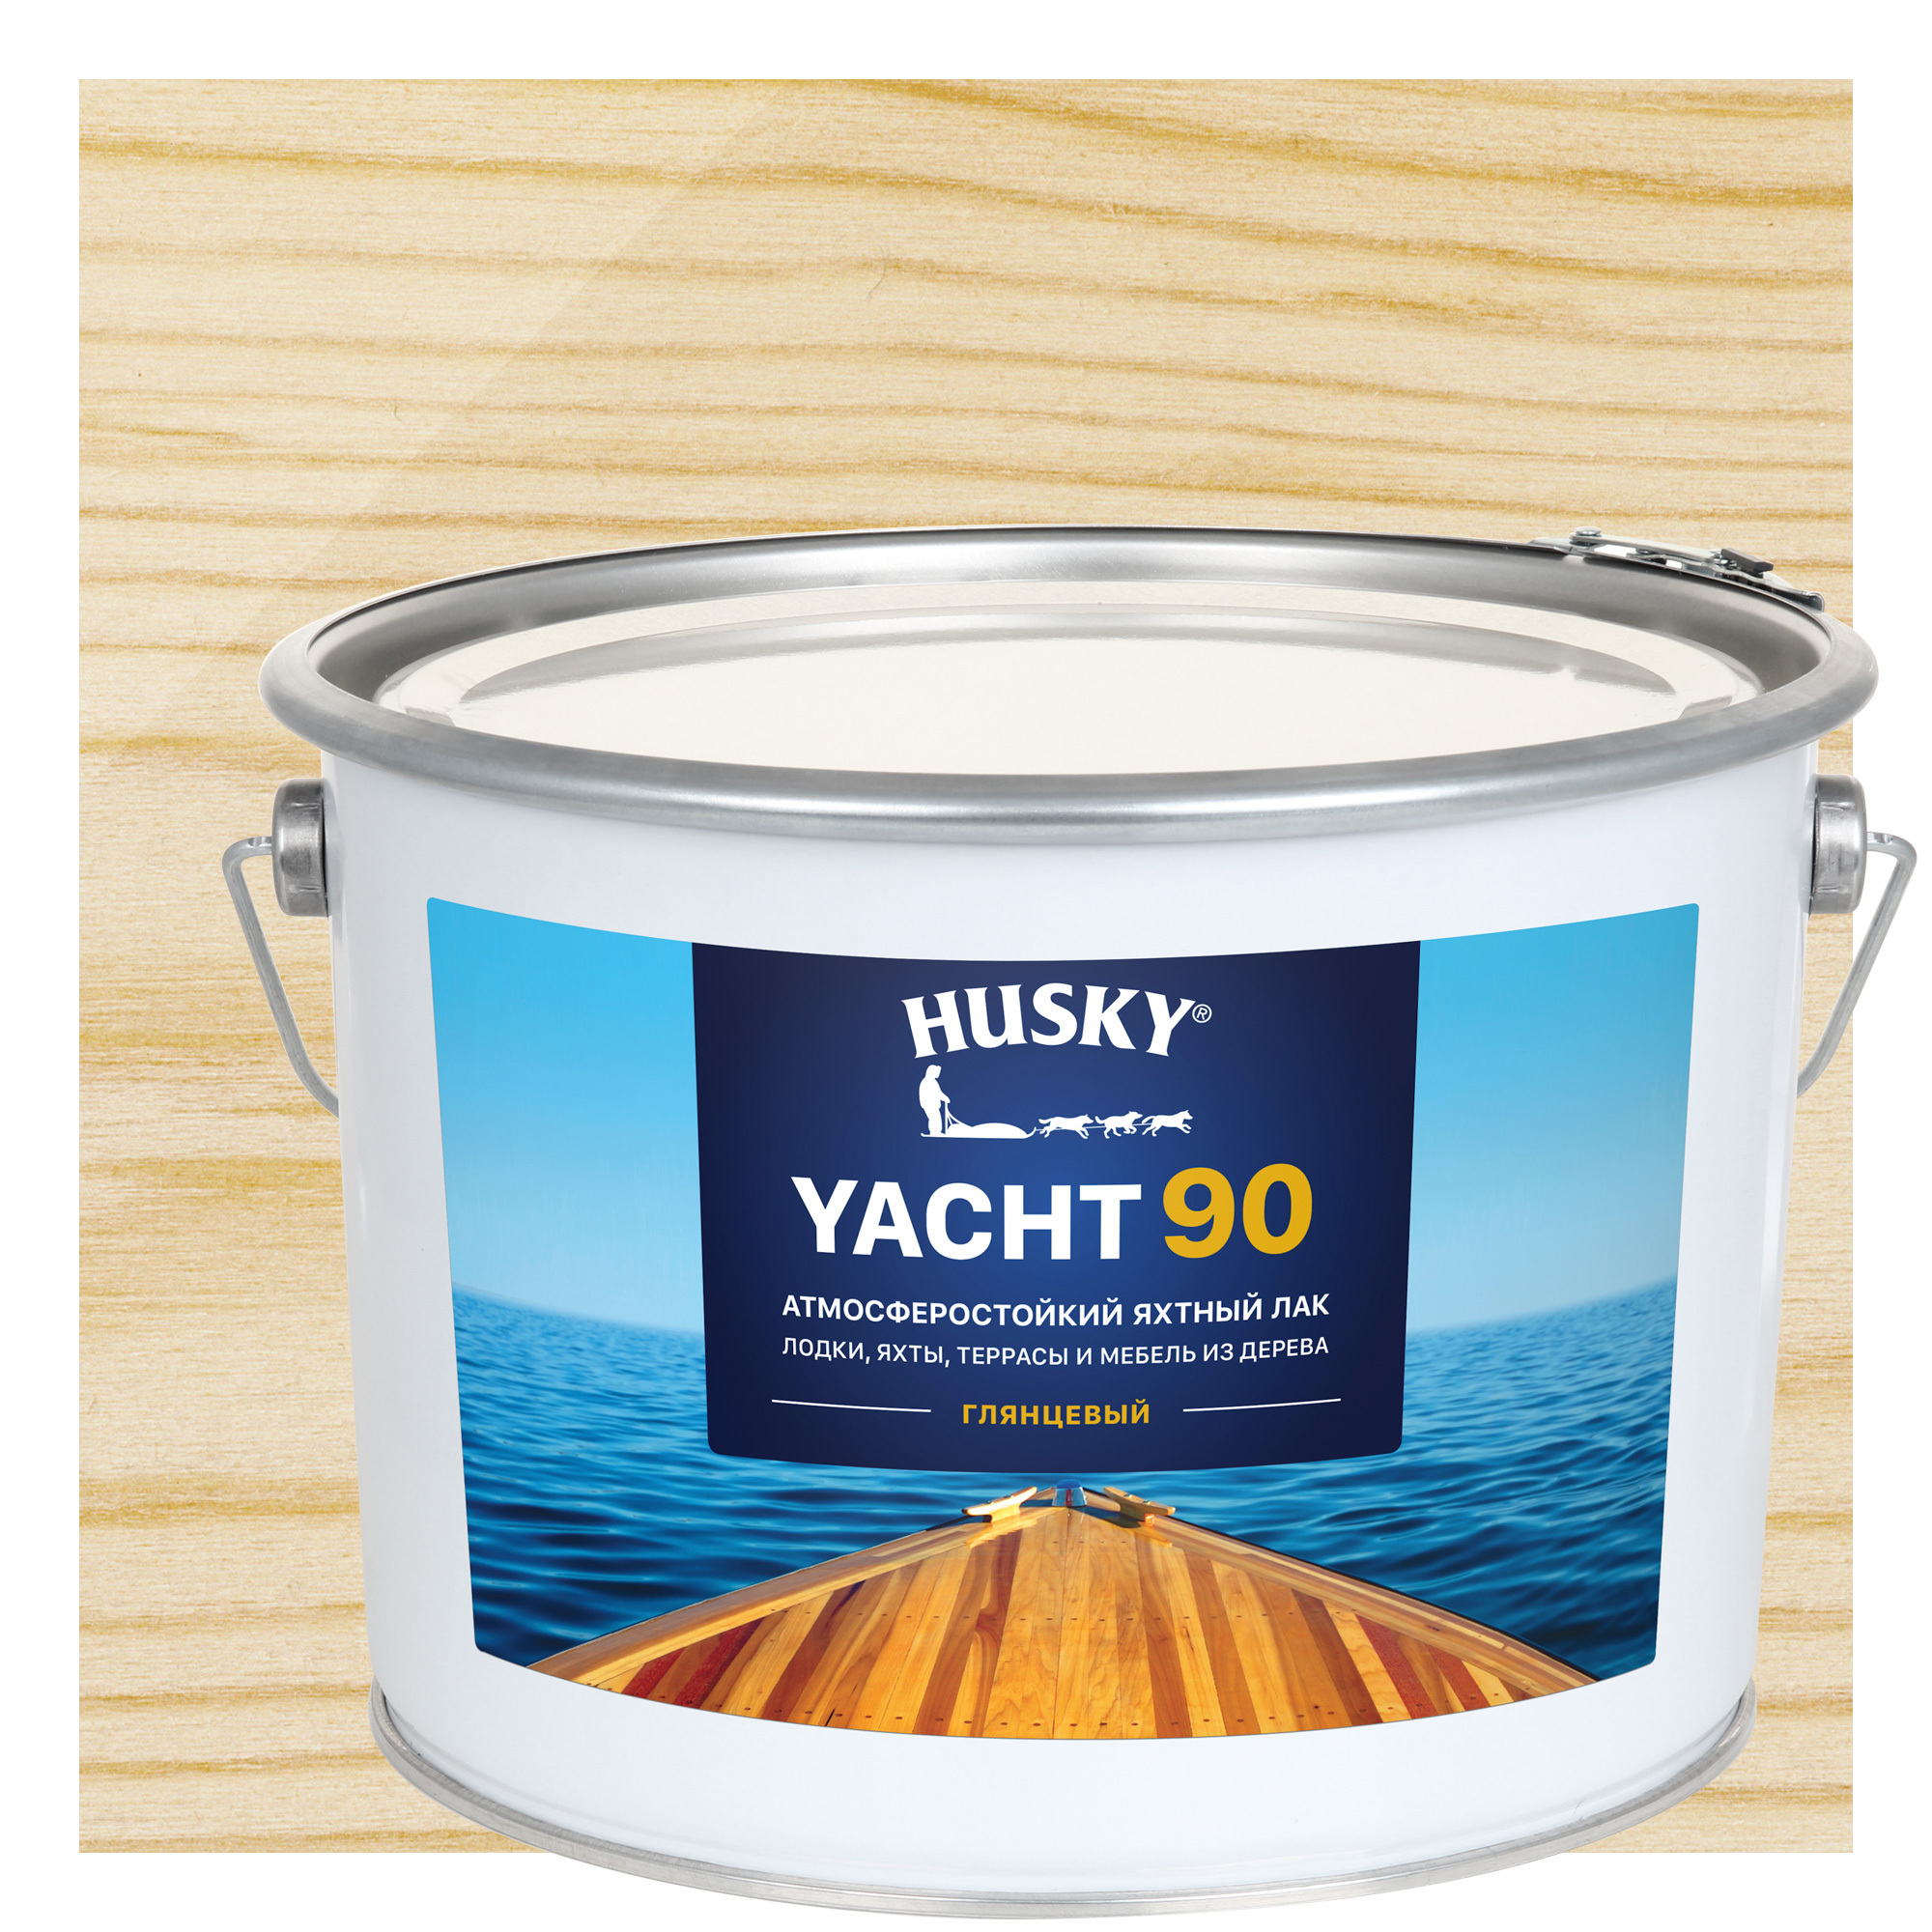 husky yacht 90